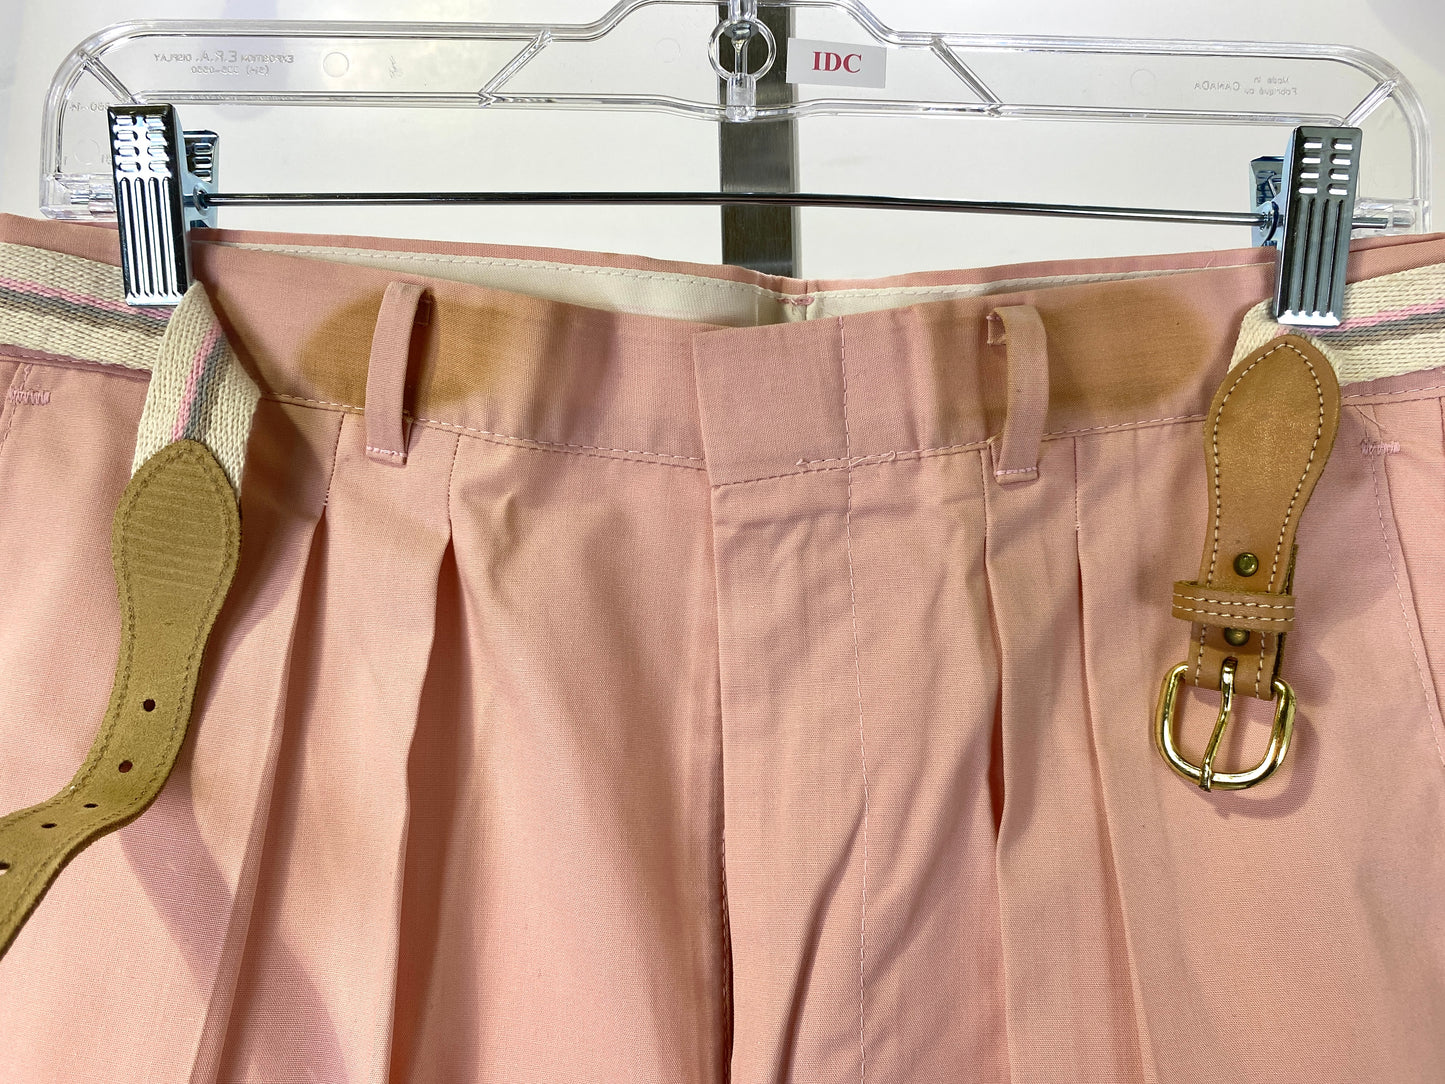 Vintage 1970s Deadstock Dee Cee Slacks, Men's Pink Belted Trousers, NOS